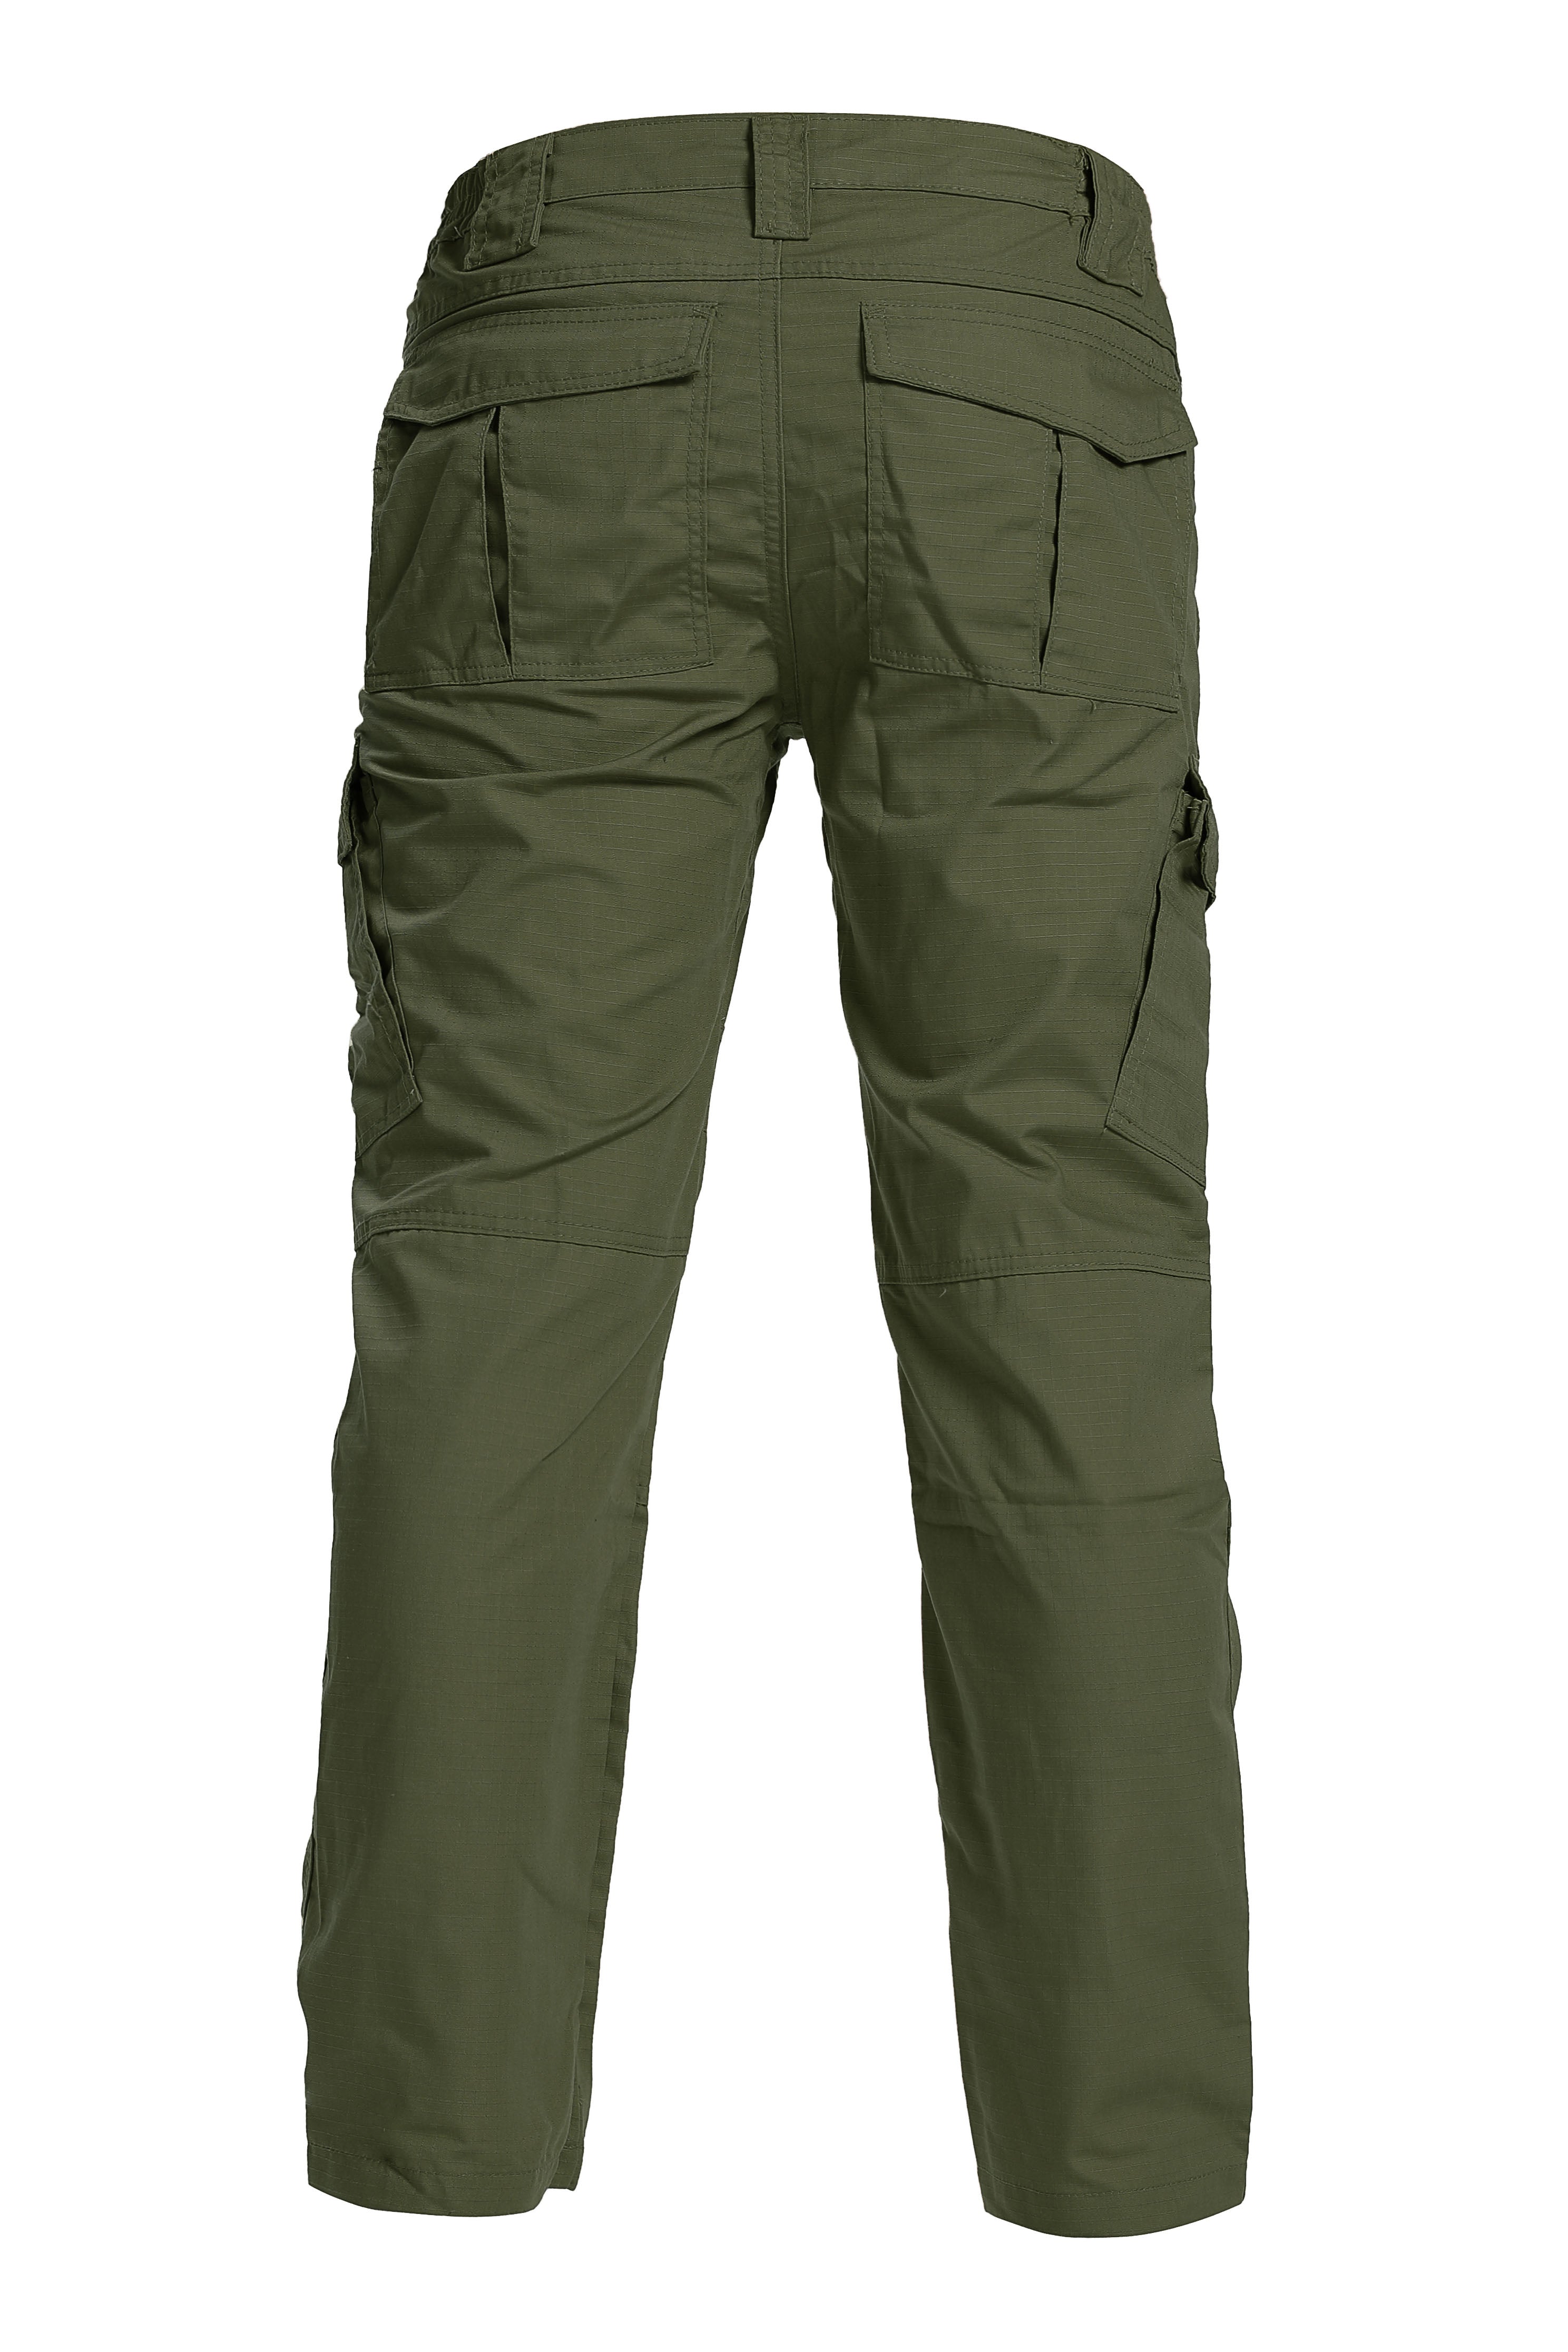 Mens Casual Combat Multi Pockets Trousers Sport Elastic Waist Cargo Pants  Zipper 